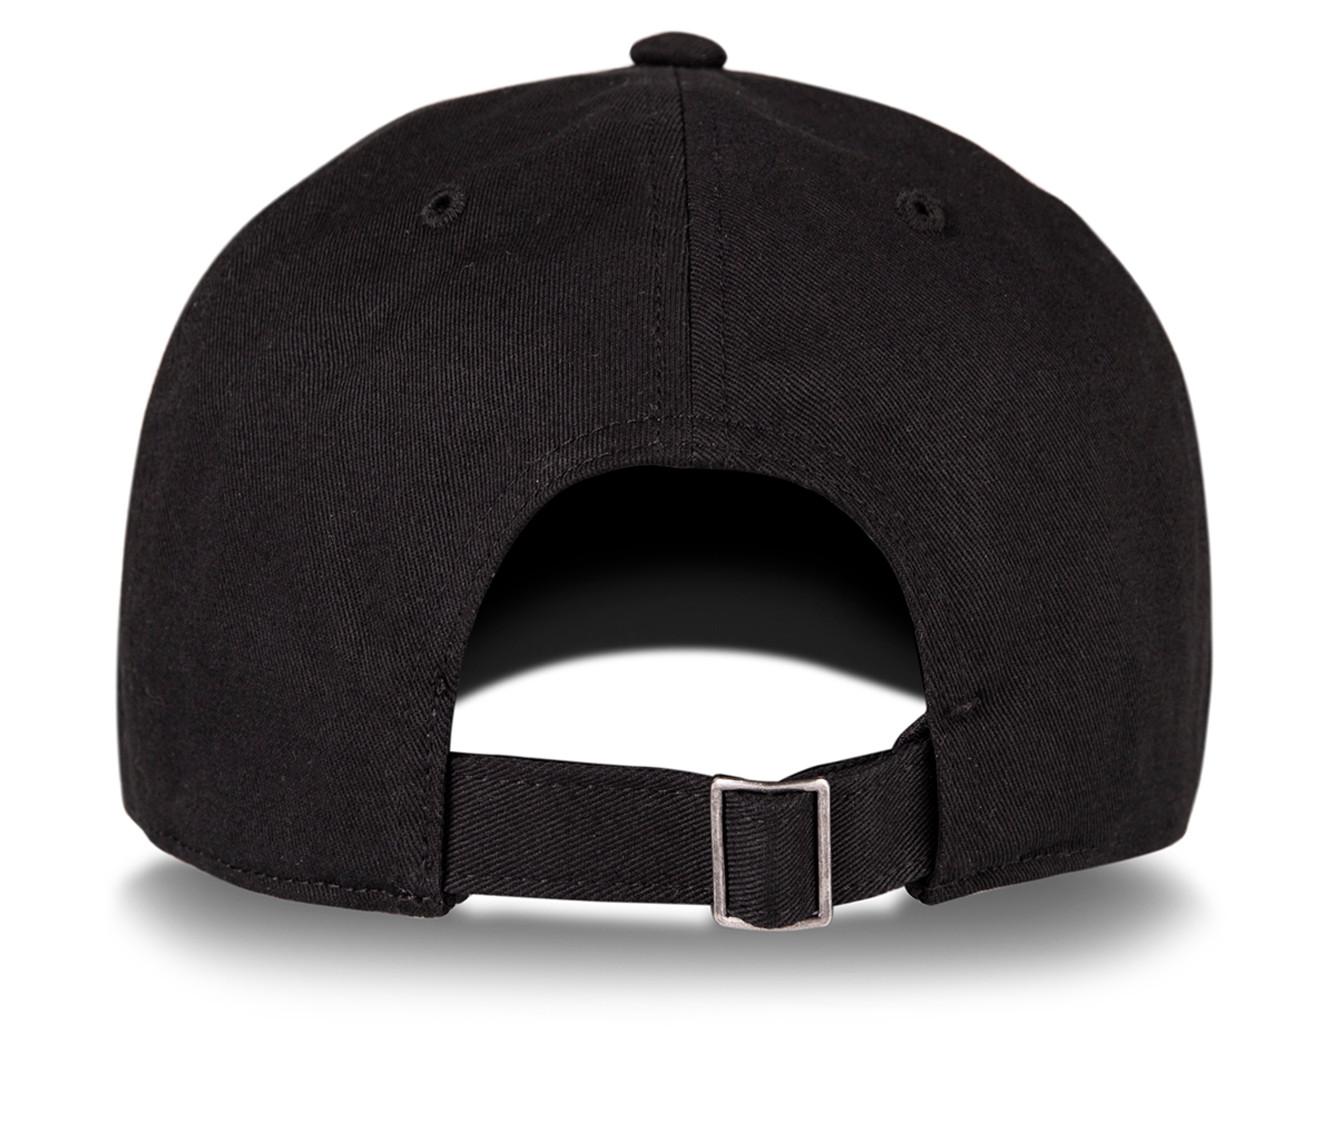 Reebok Logo Cap Baseball Hat